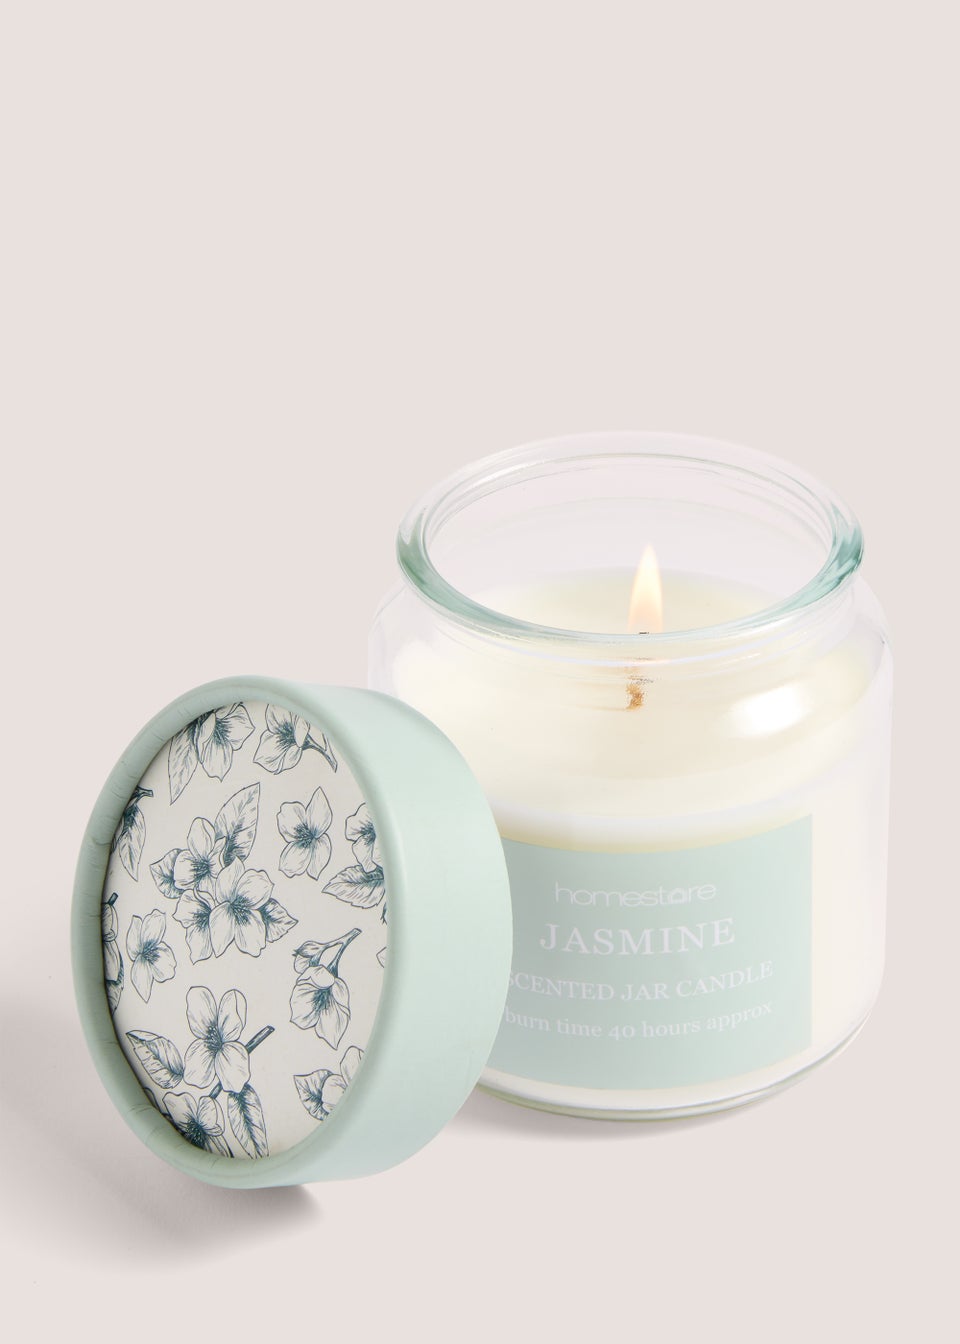 Jasmine Scented Jar Candle (340g)